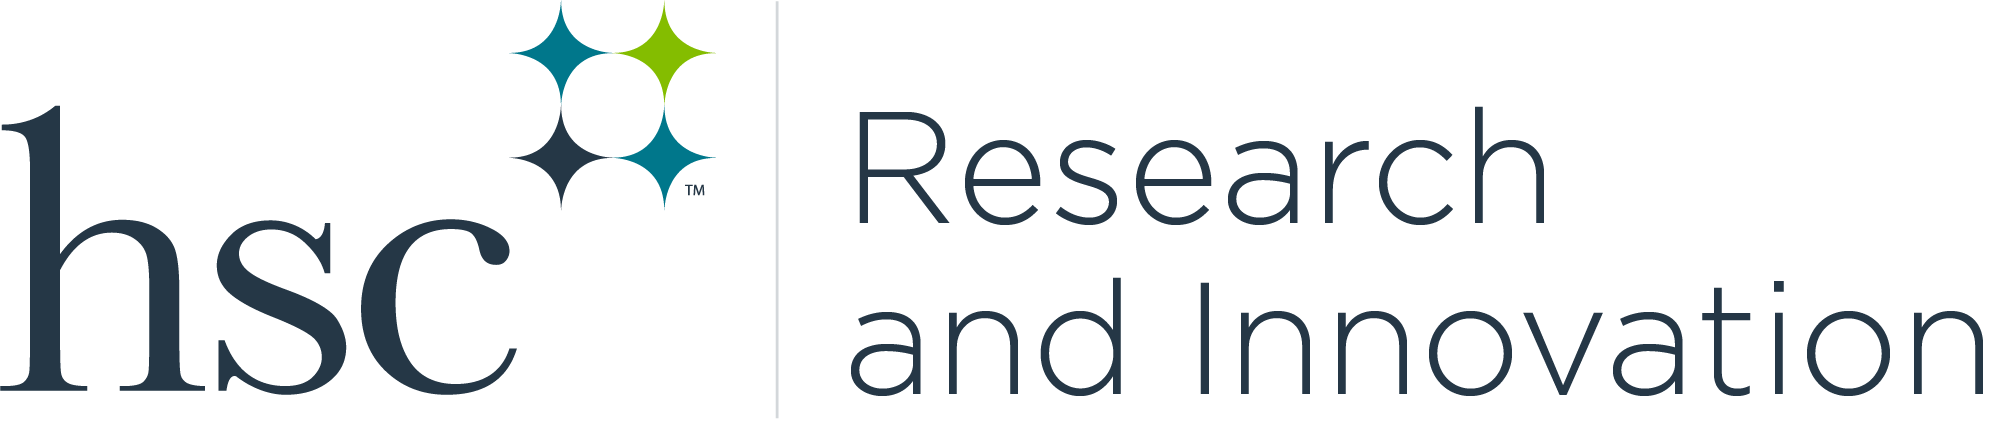 HSC Research and Innovation Legends Sponsorship Logo